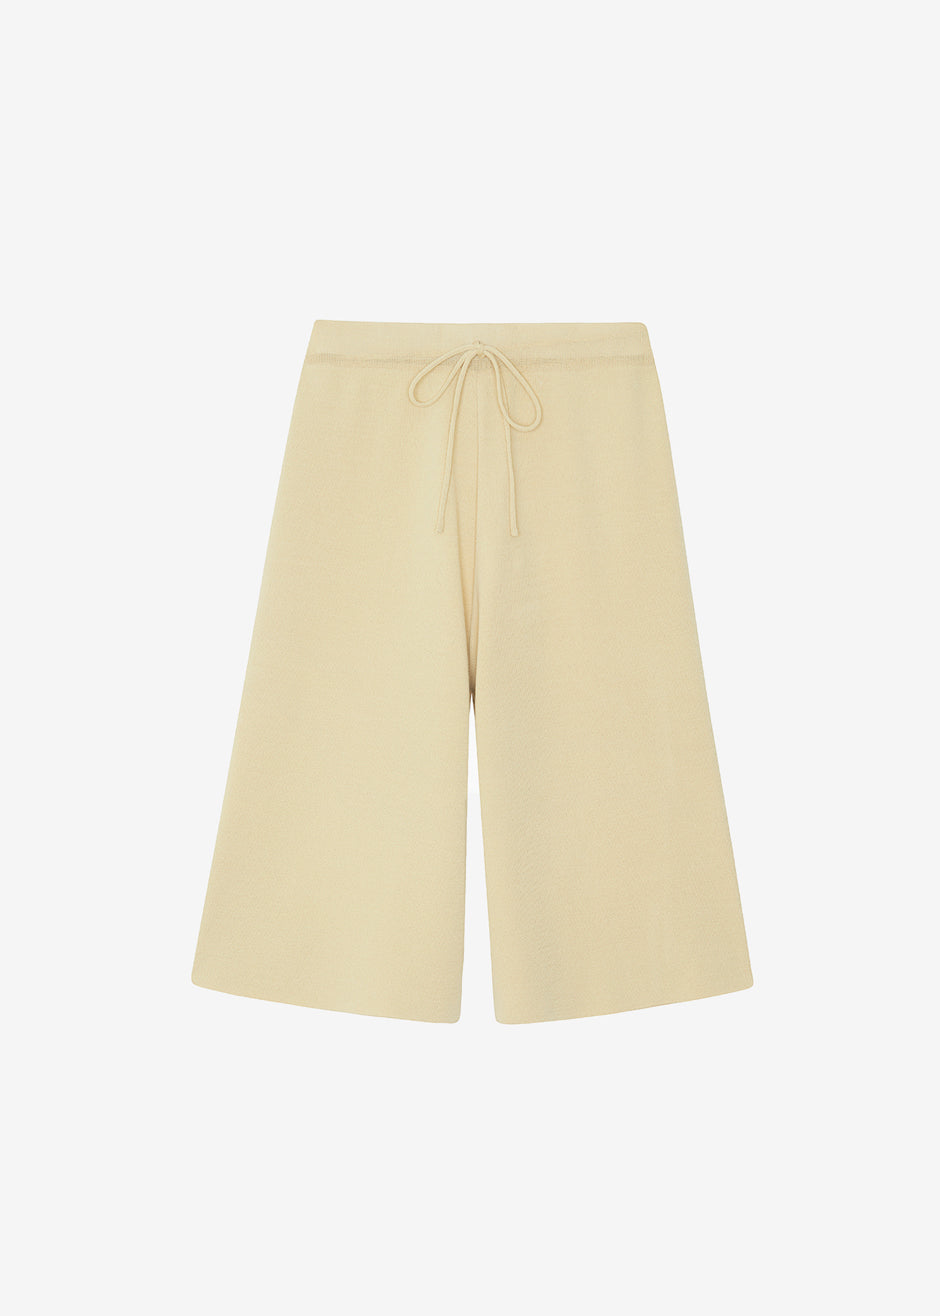 Thea Knit Bermuda Shorts - Straw - 12